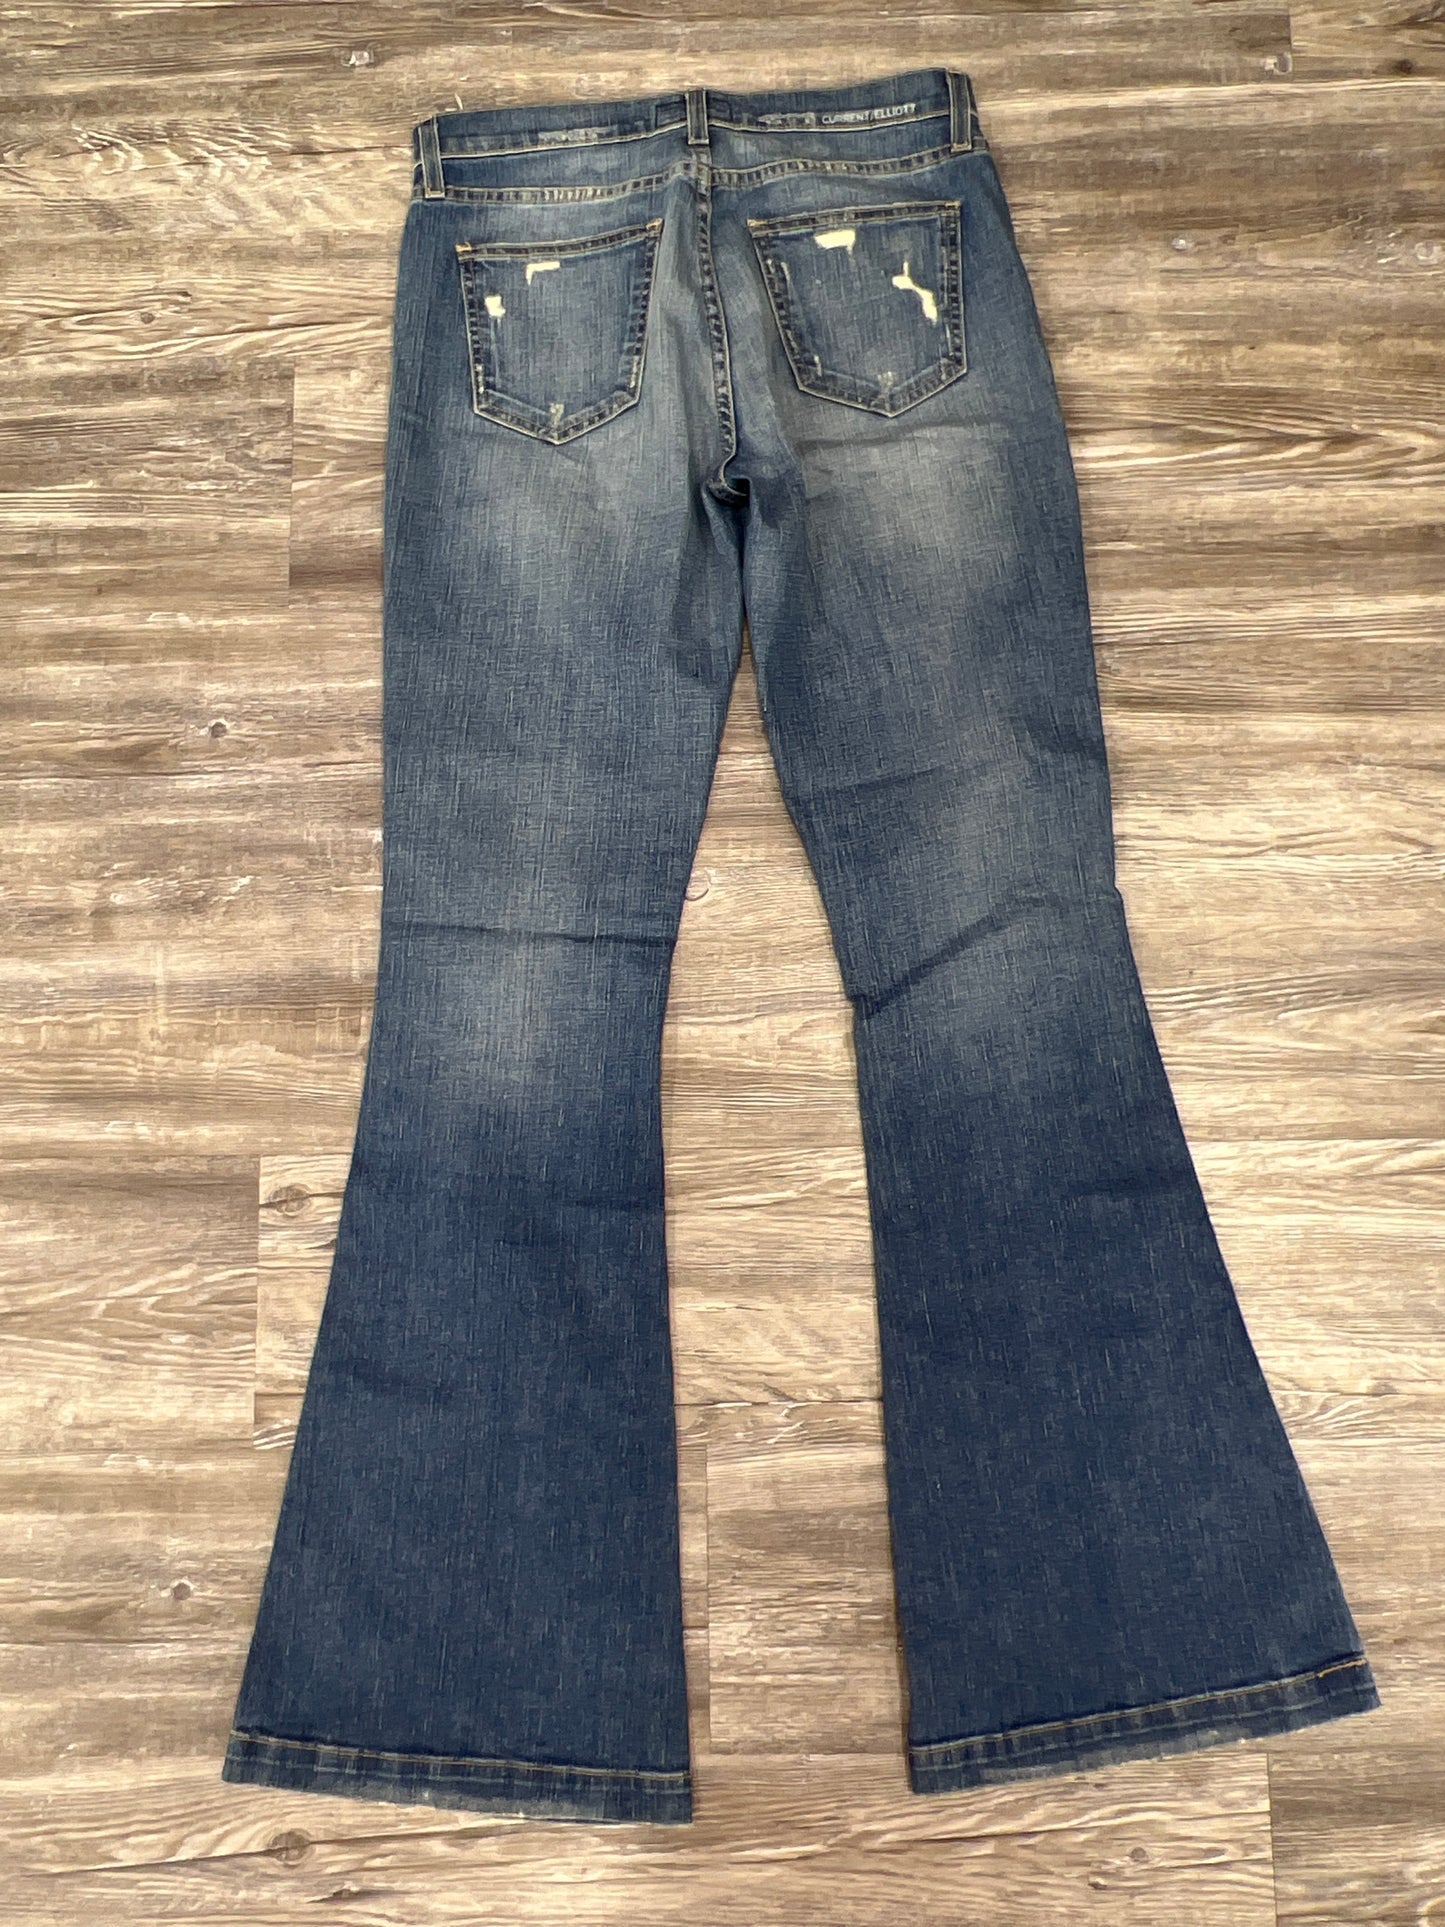 Jeans Designer By Current Elliott Size: 6